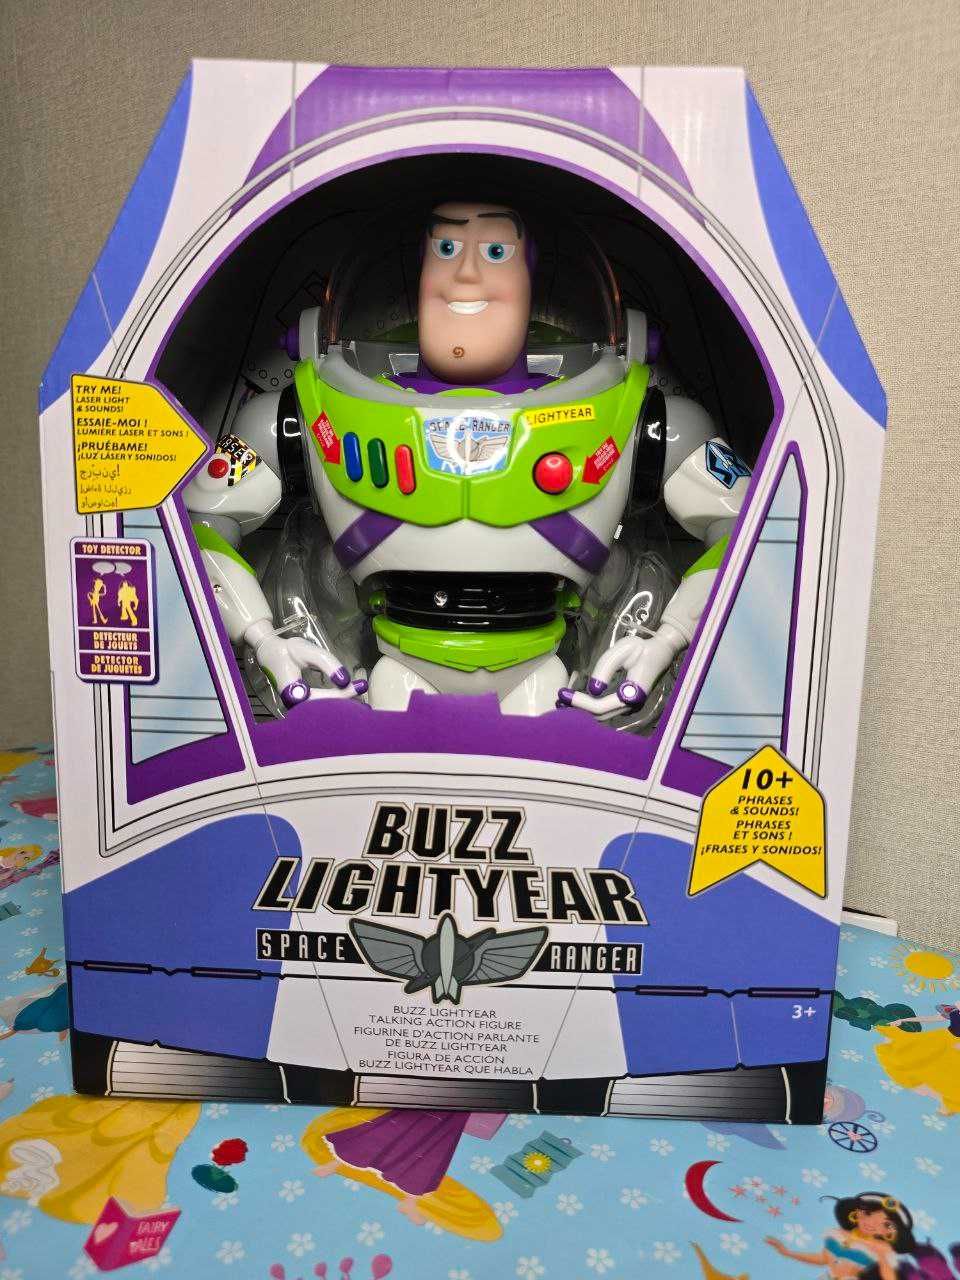 Toy Story История игрушек Базз Лайтер / Баз Светик / Buzz Lightyear